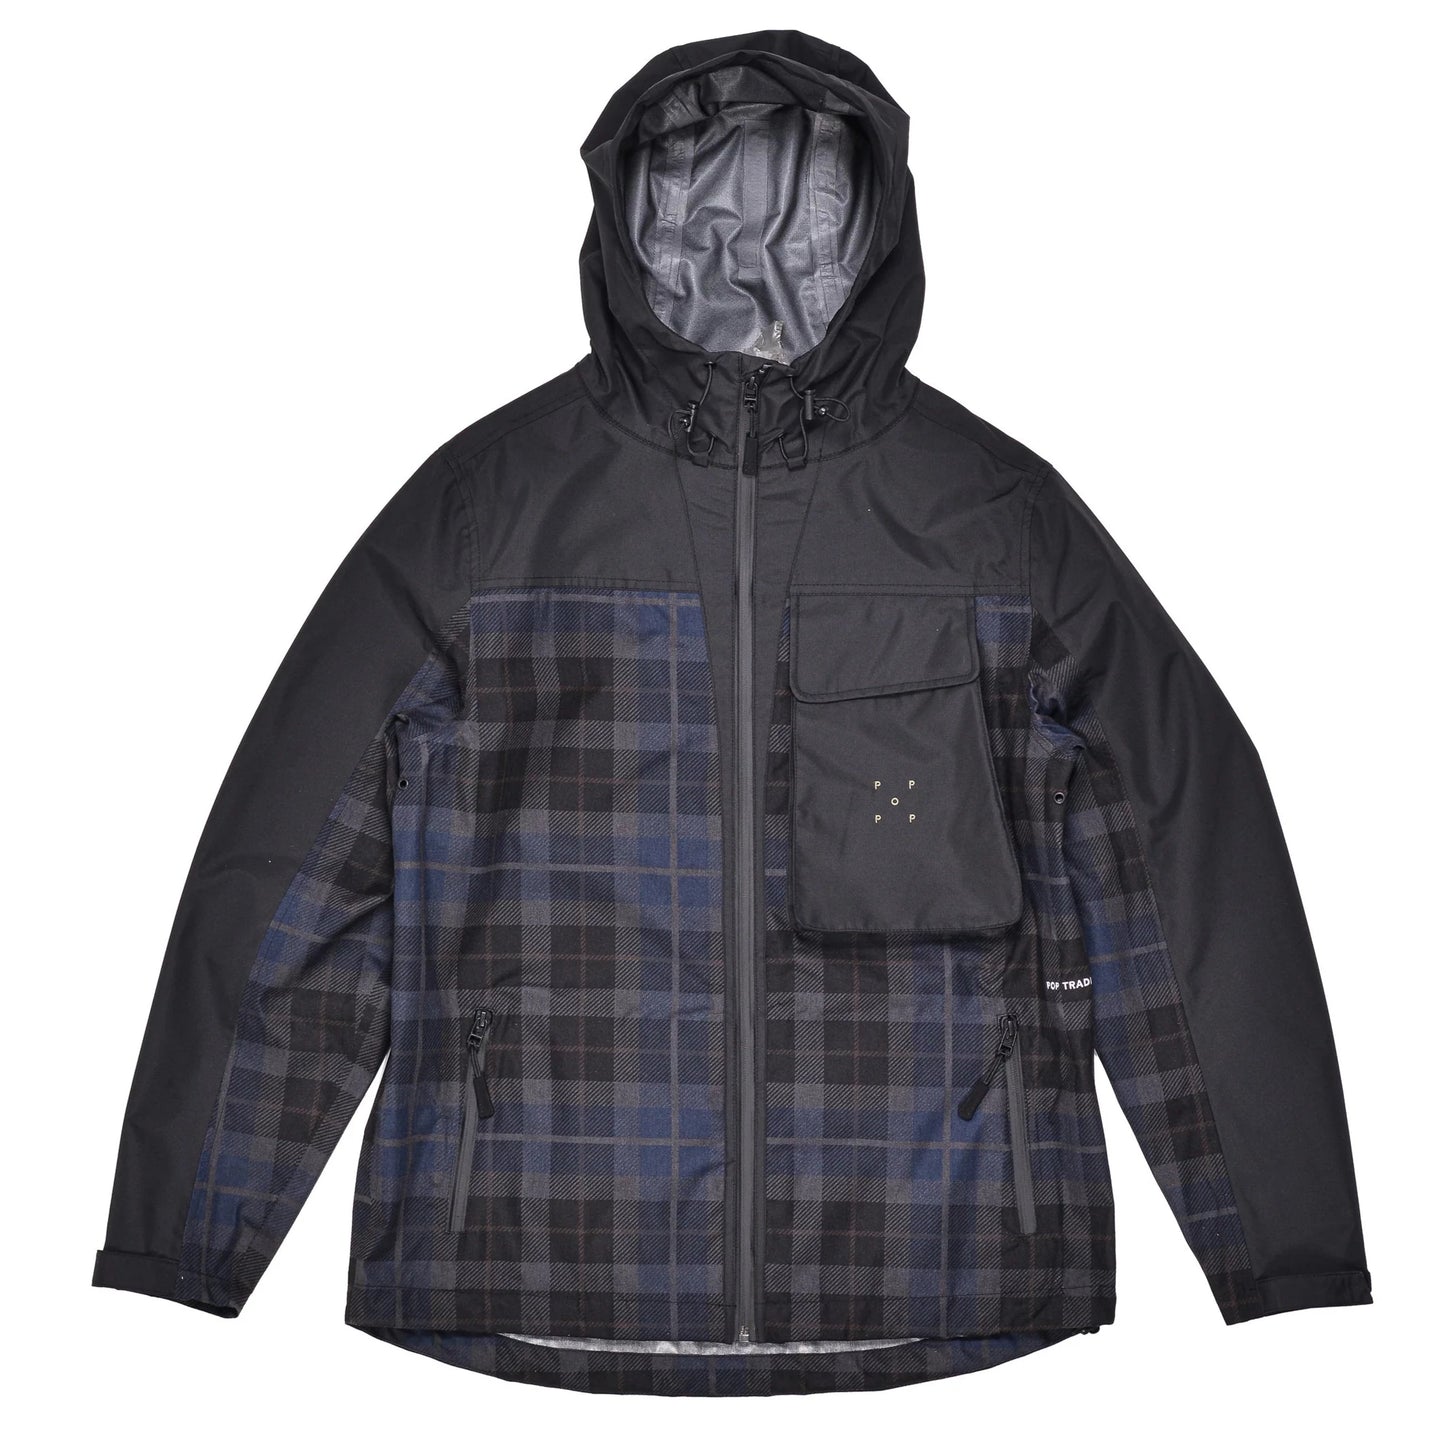 Pop Trading Company - Big Pocket Hooded Jacket - Black/Navy Check